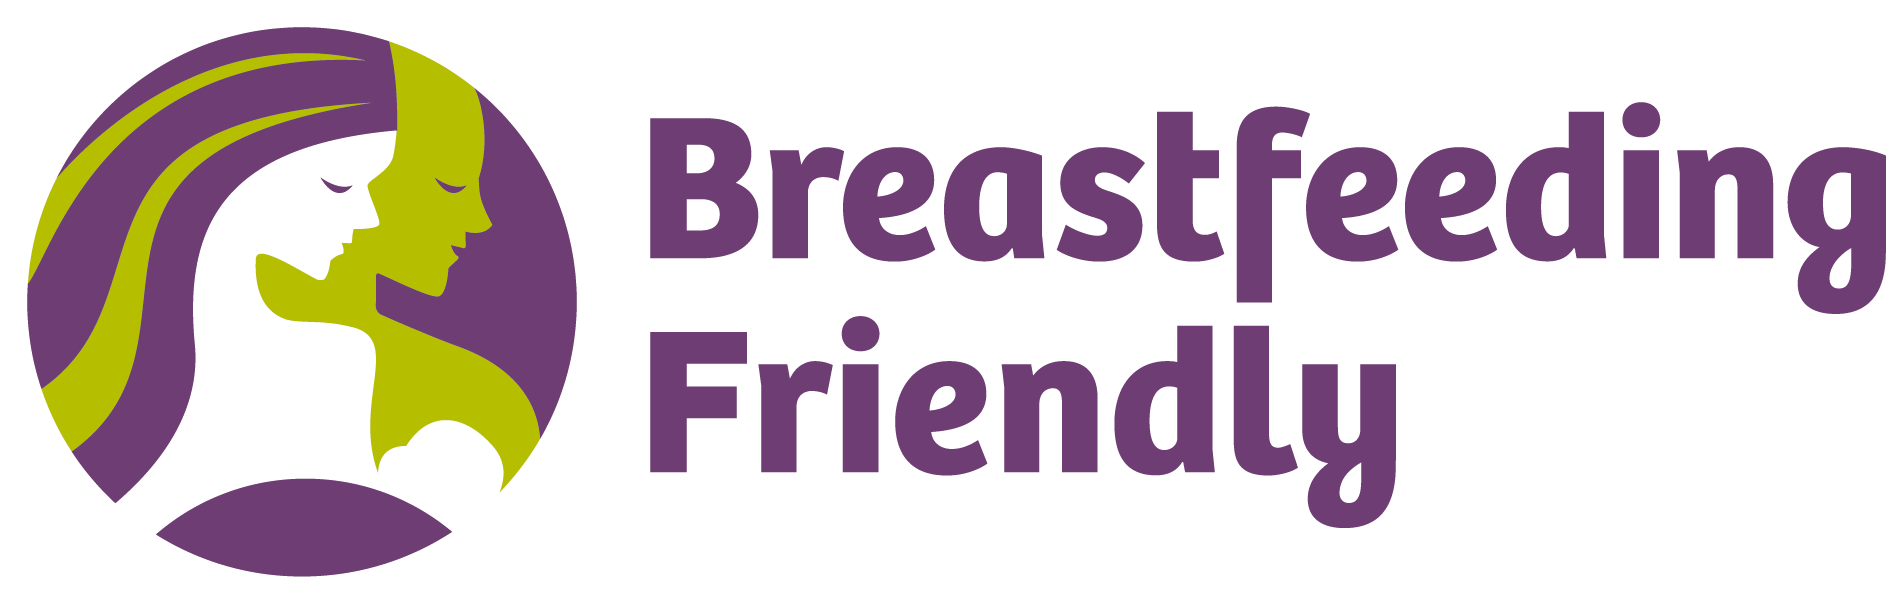 The Breastfeeding Friendly Logo